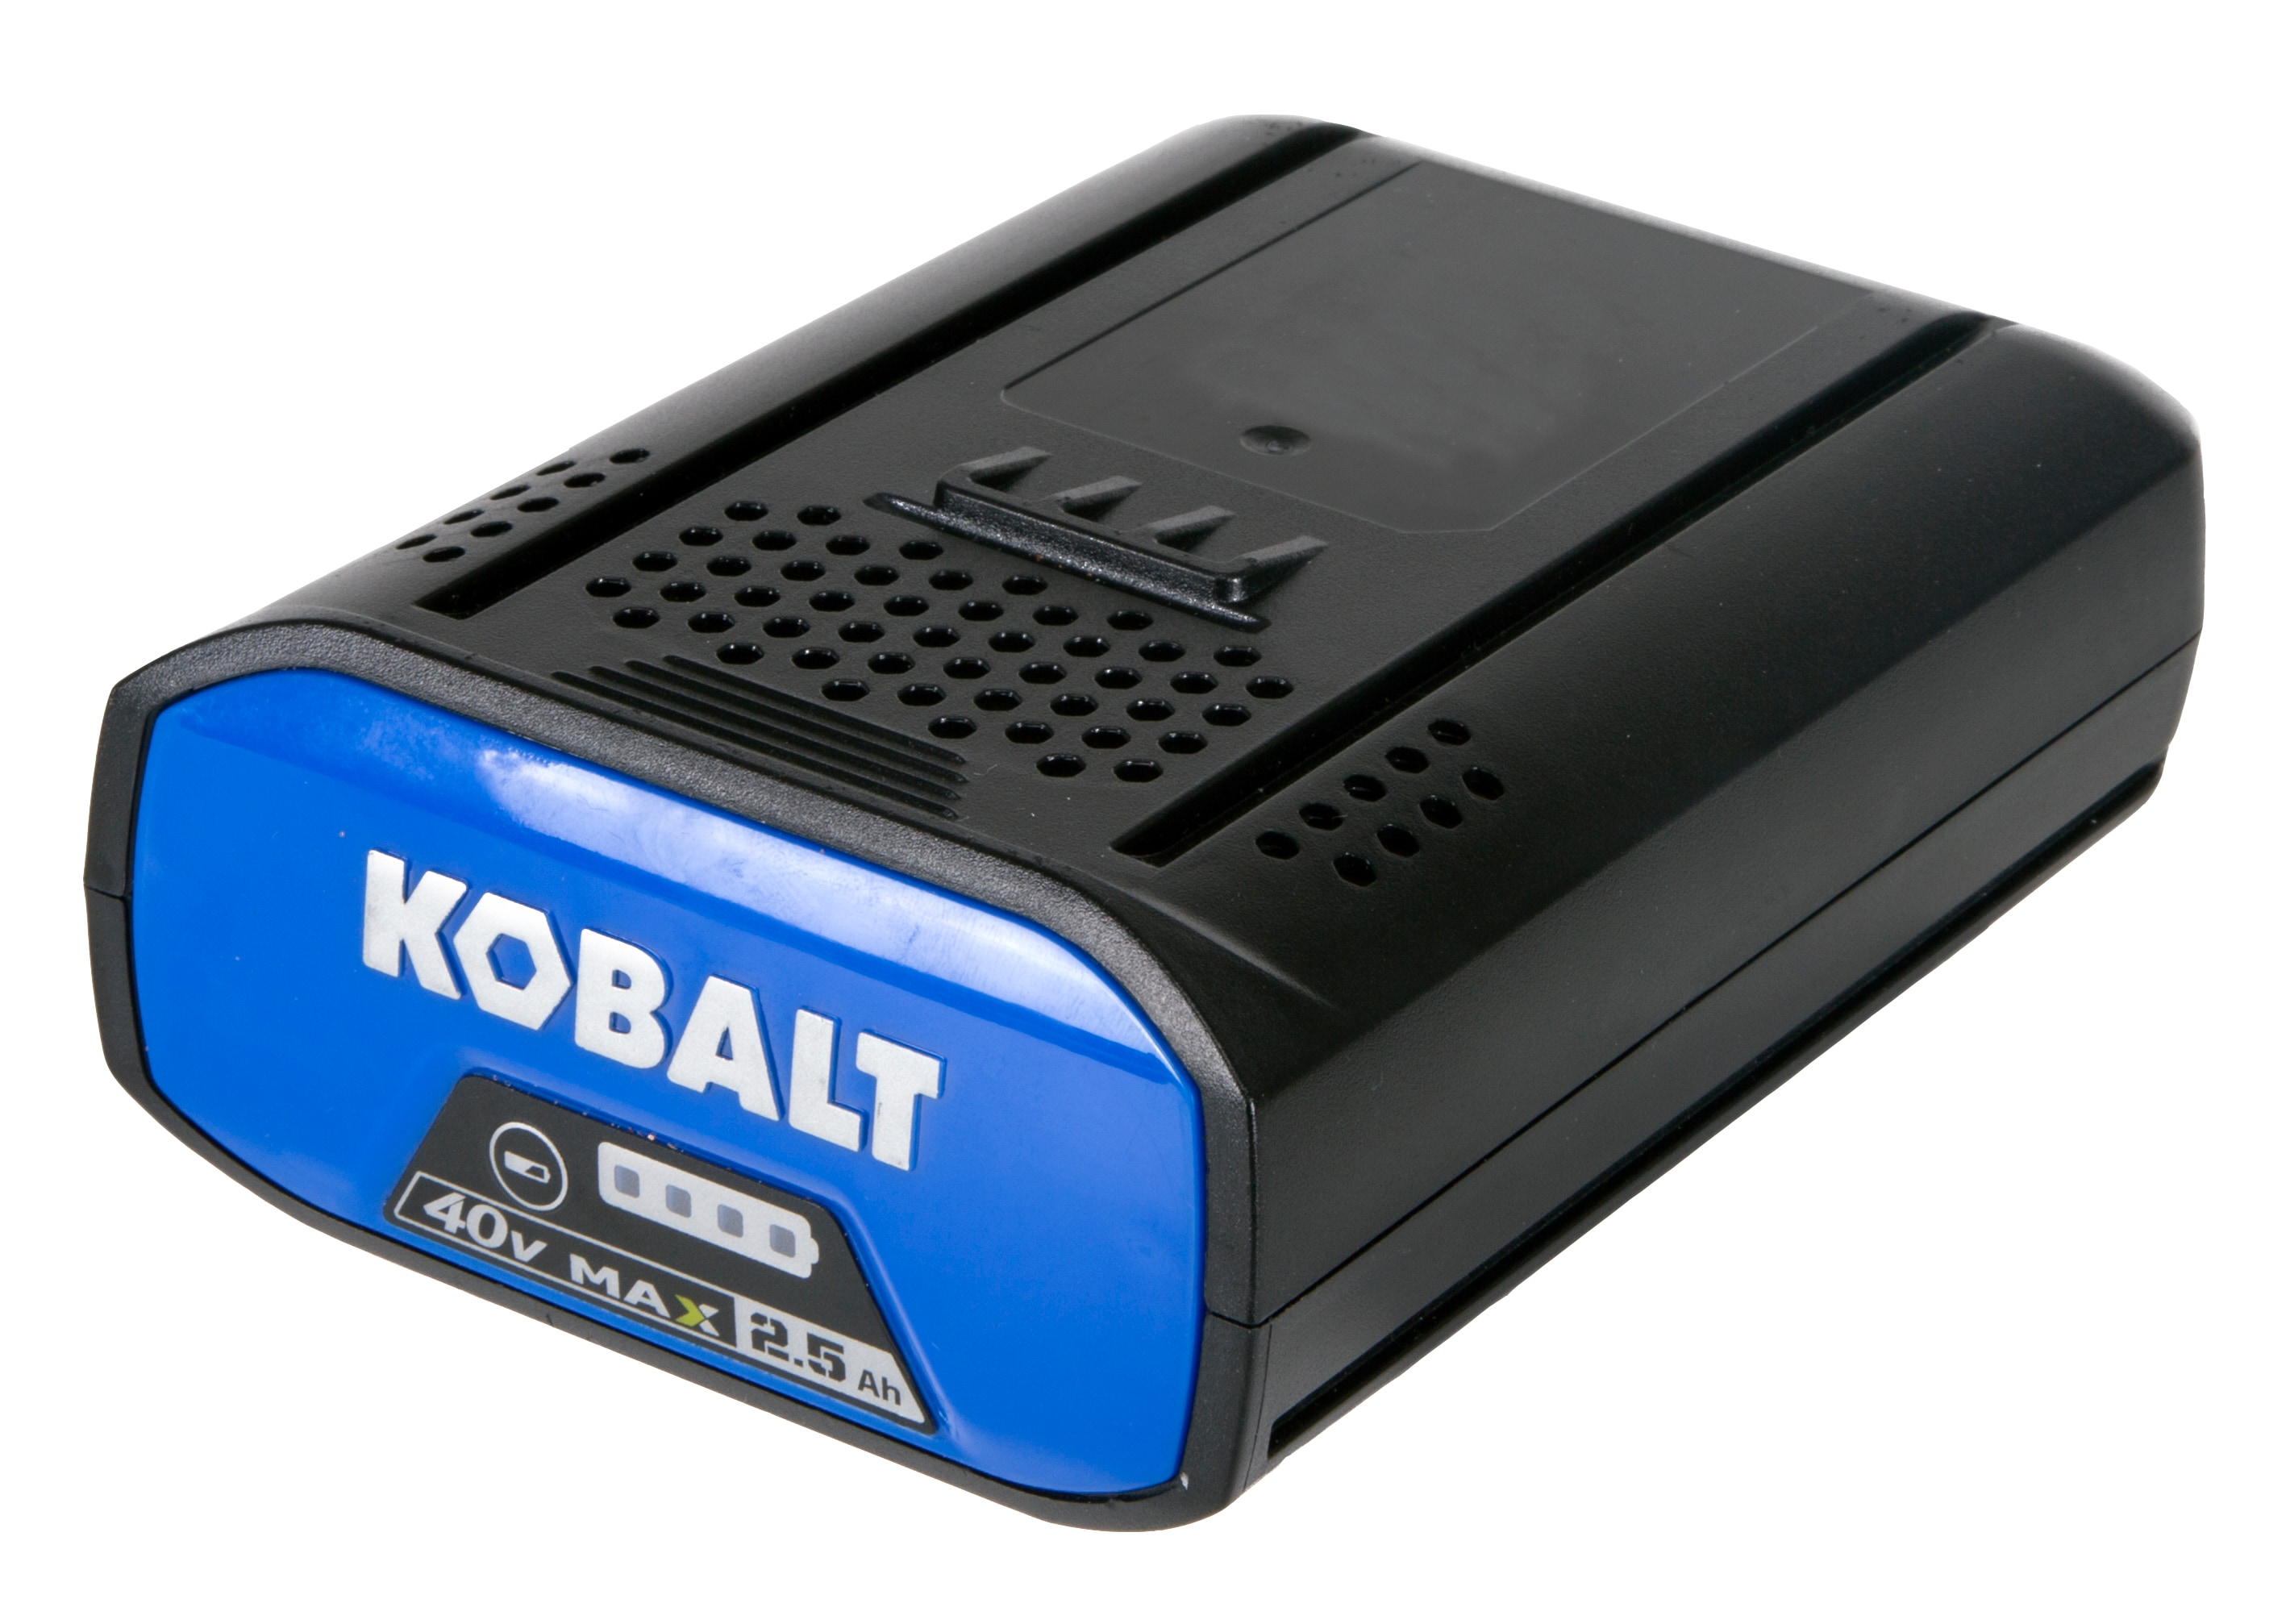 Kobalt 40-Volt Lithium Ion (li-ion) Battery at